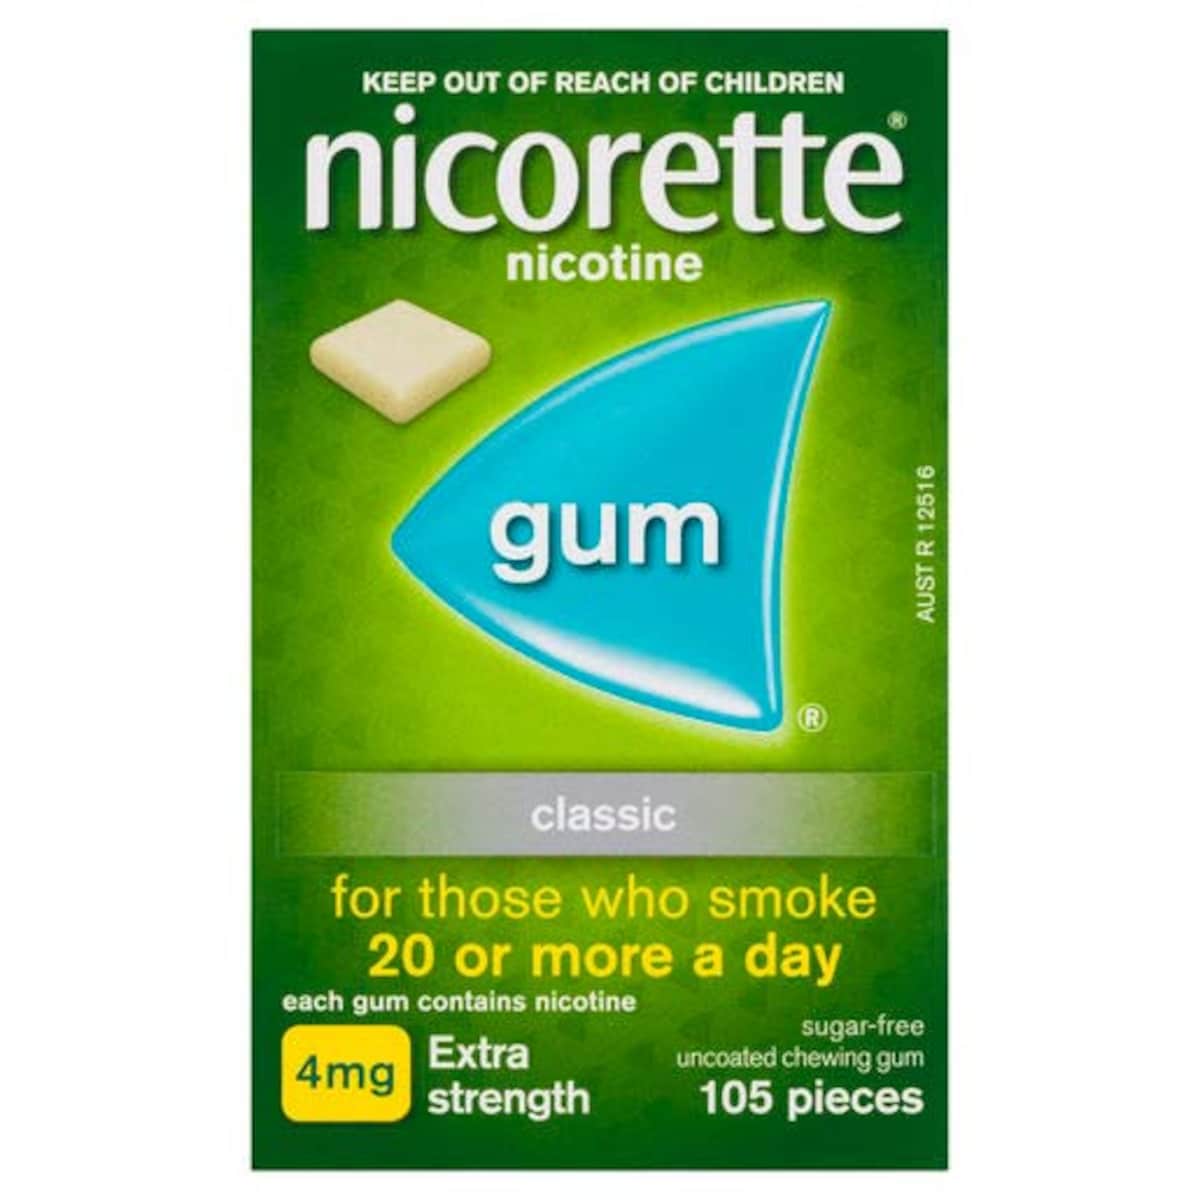 Nicorette Quit Smoking Nicotine Gum 4mg Classic 105 Pieces